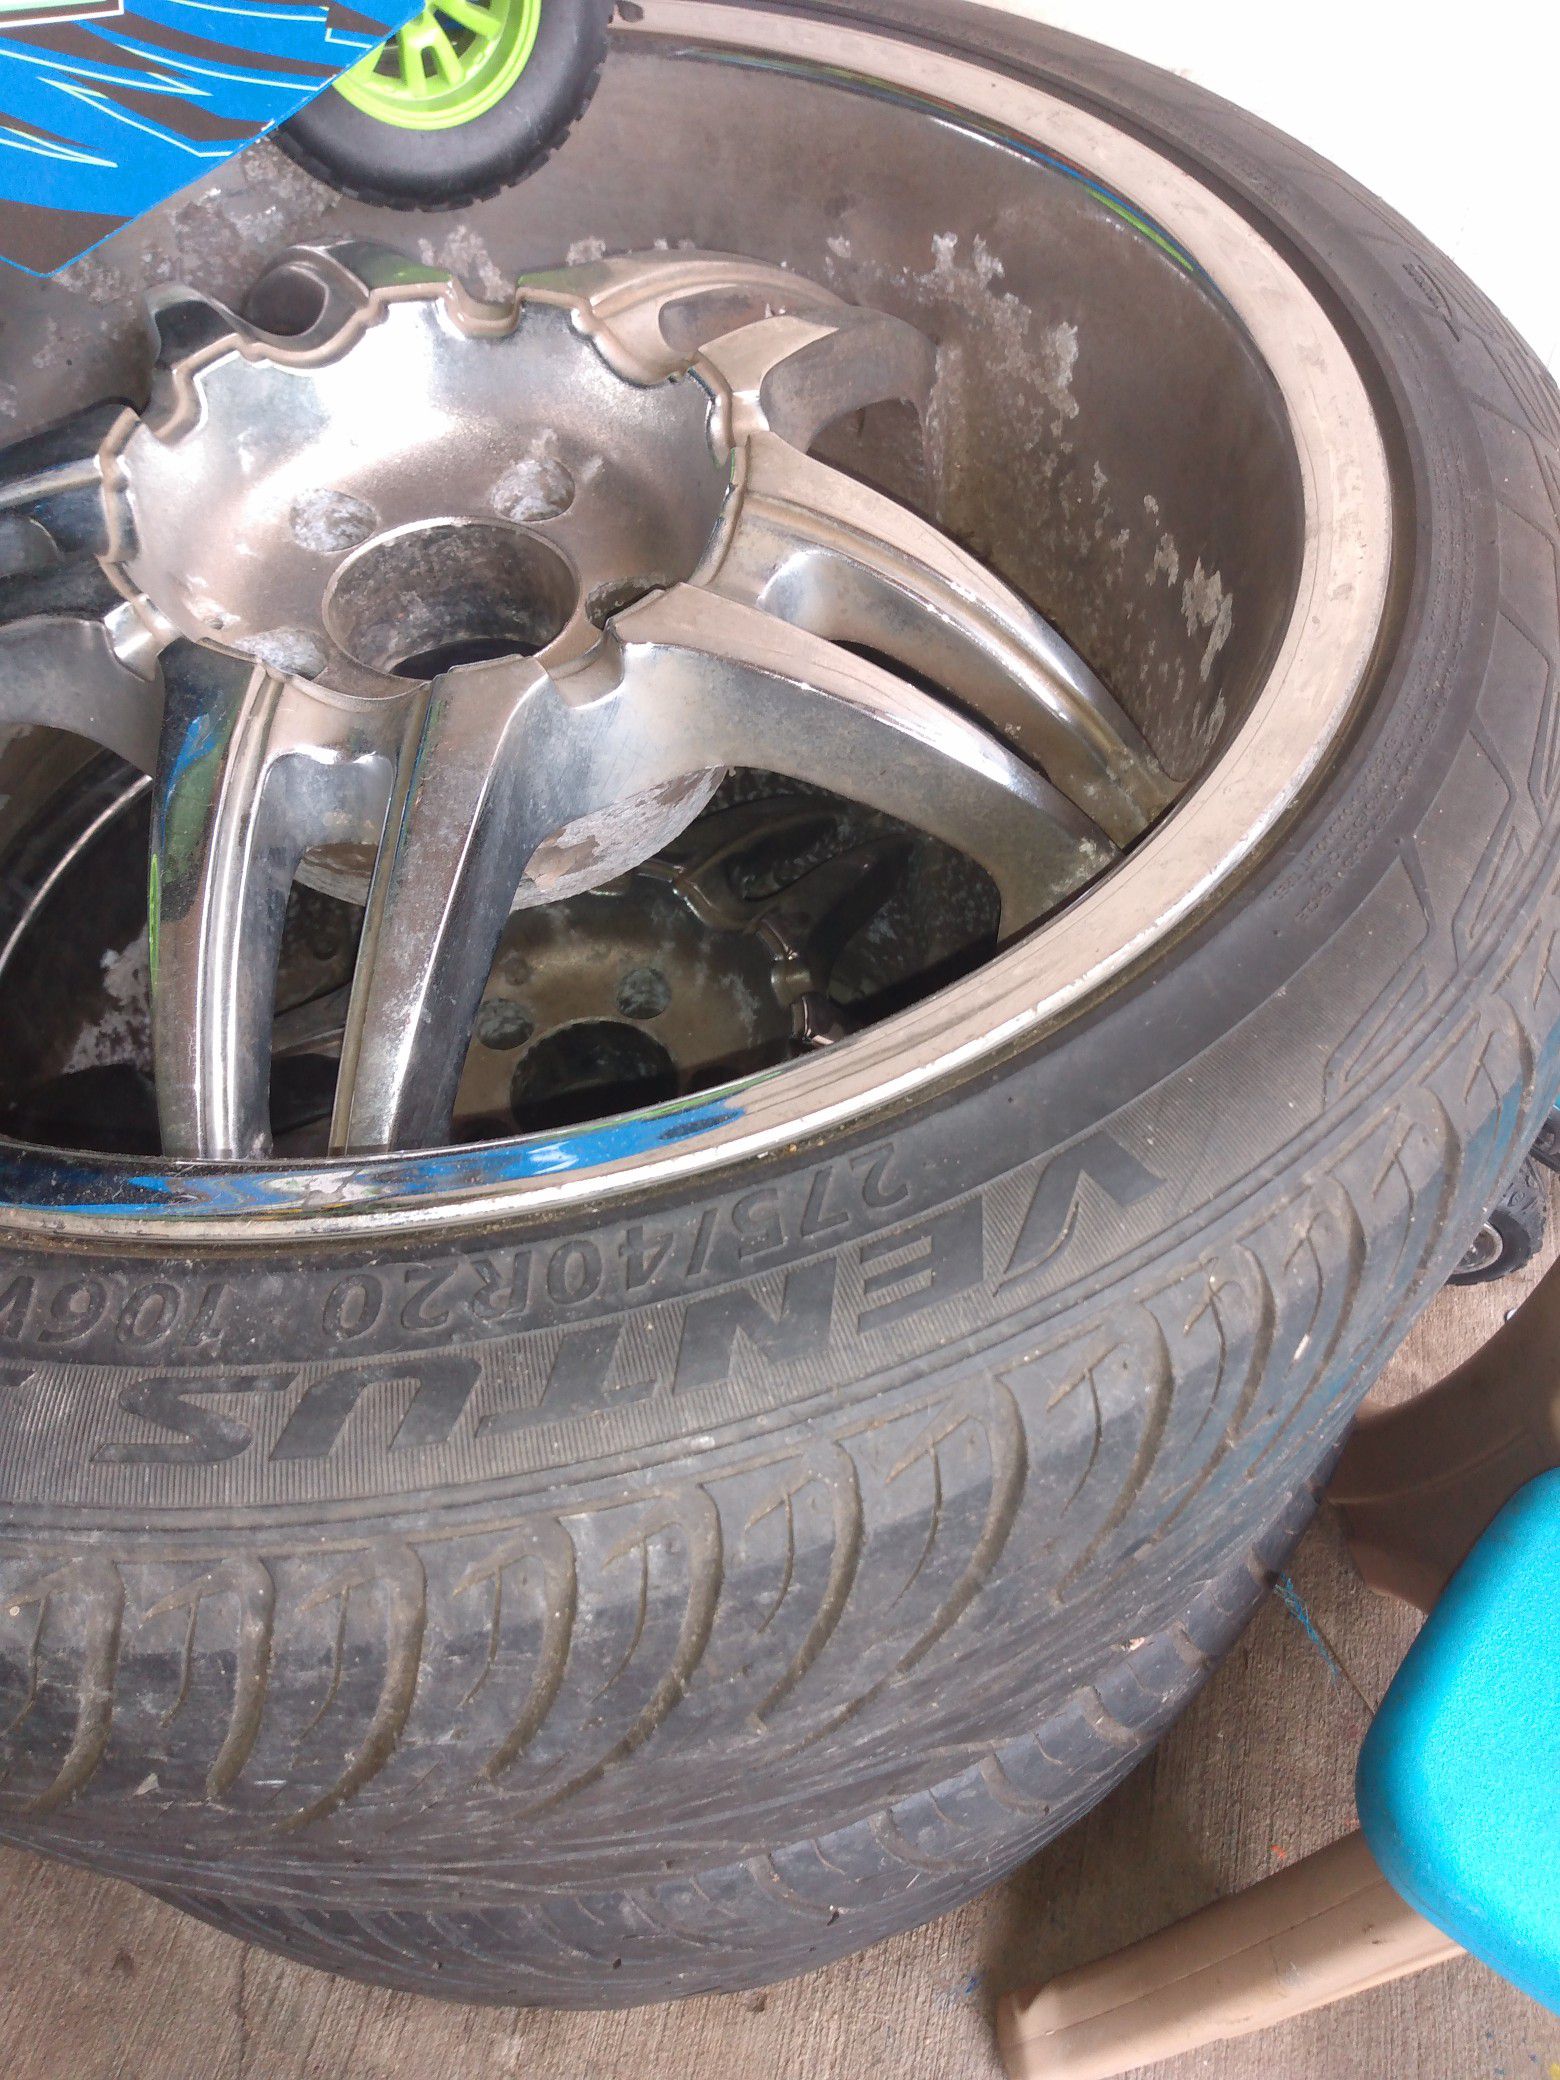 20 inch rims n good tires